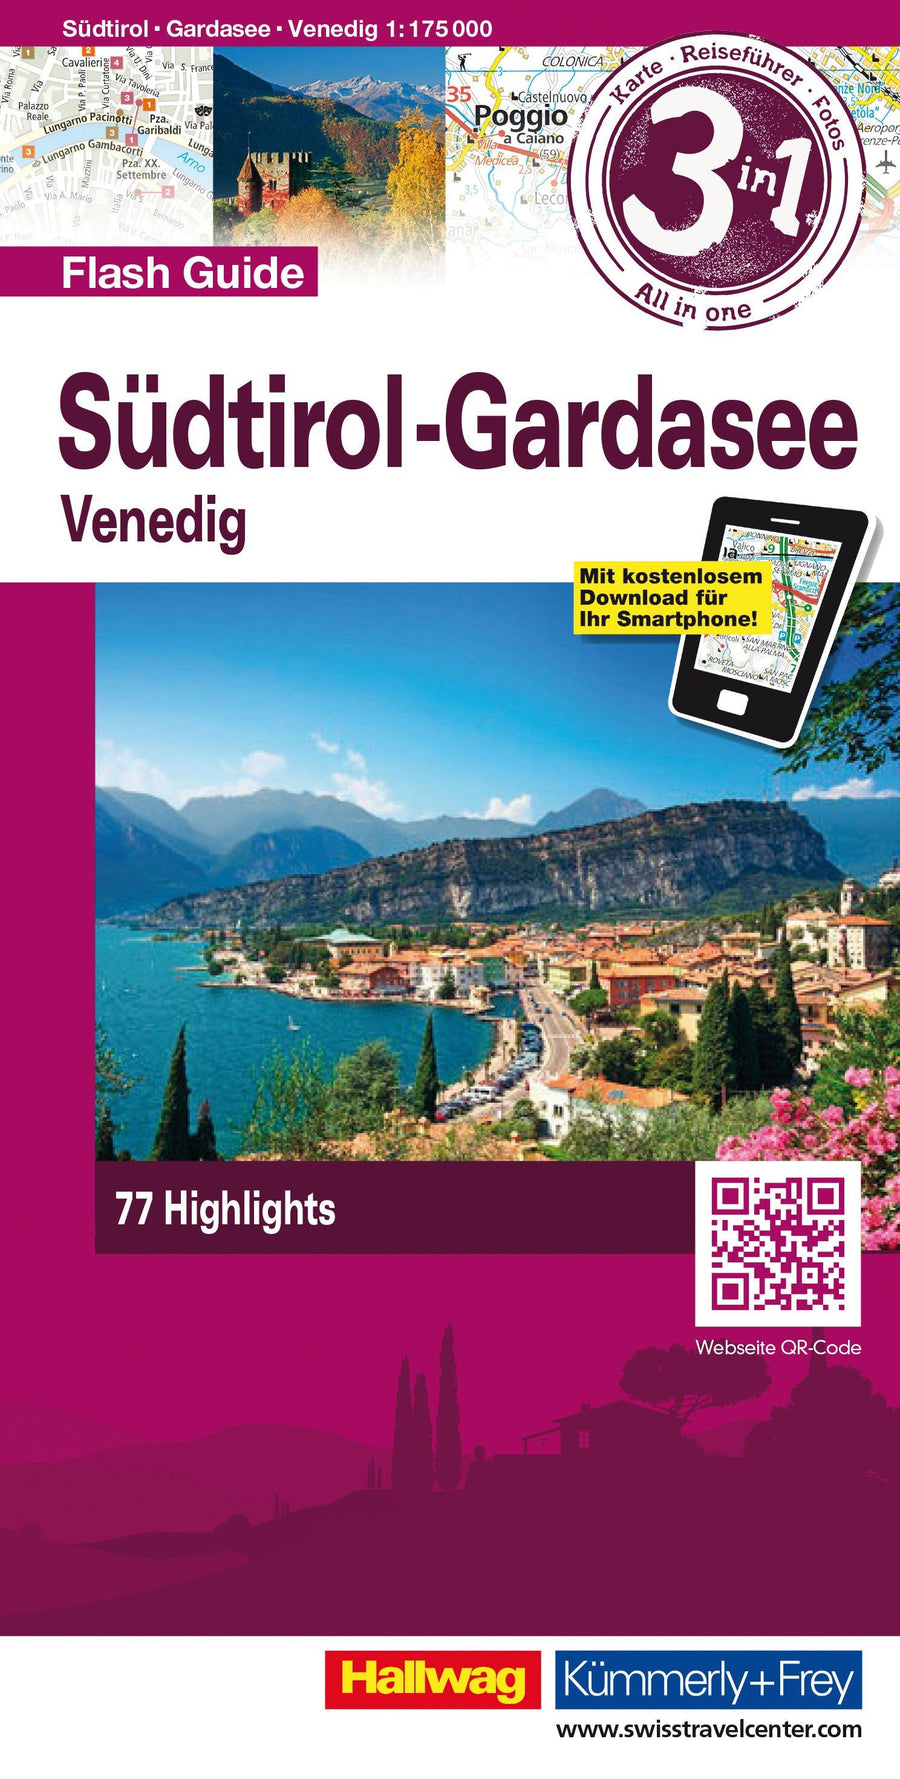 Carte de voyage - Tyrol du Sud, Lac de Garde, Venise Flash Guide | Hallwag carte pliée Hallwag 